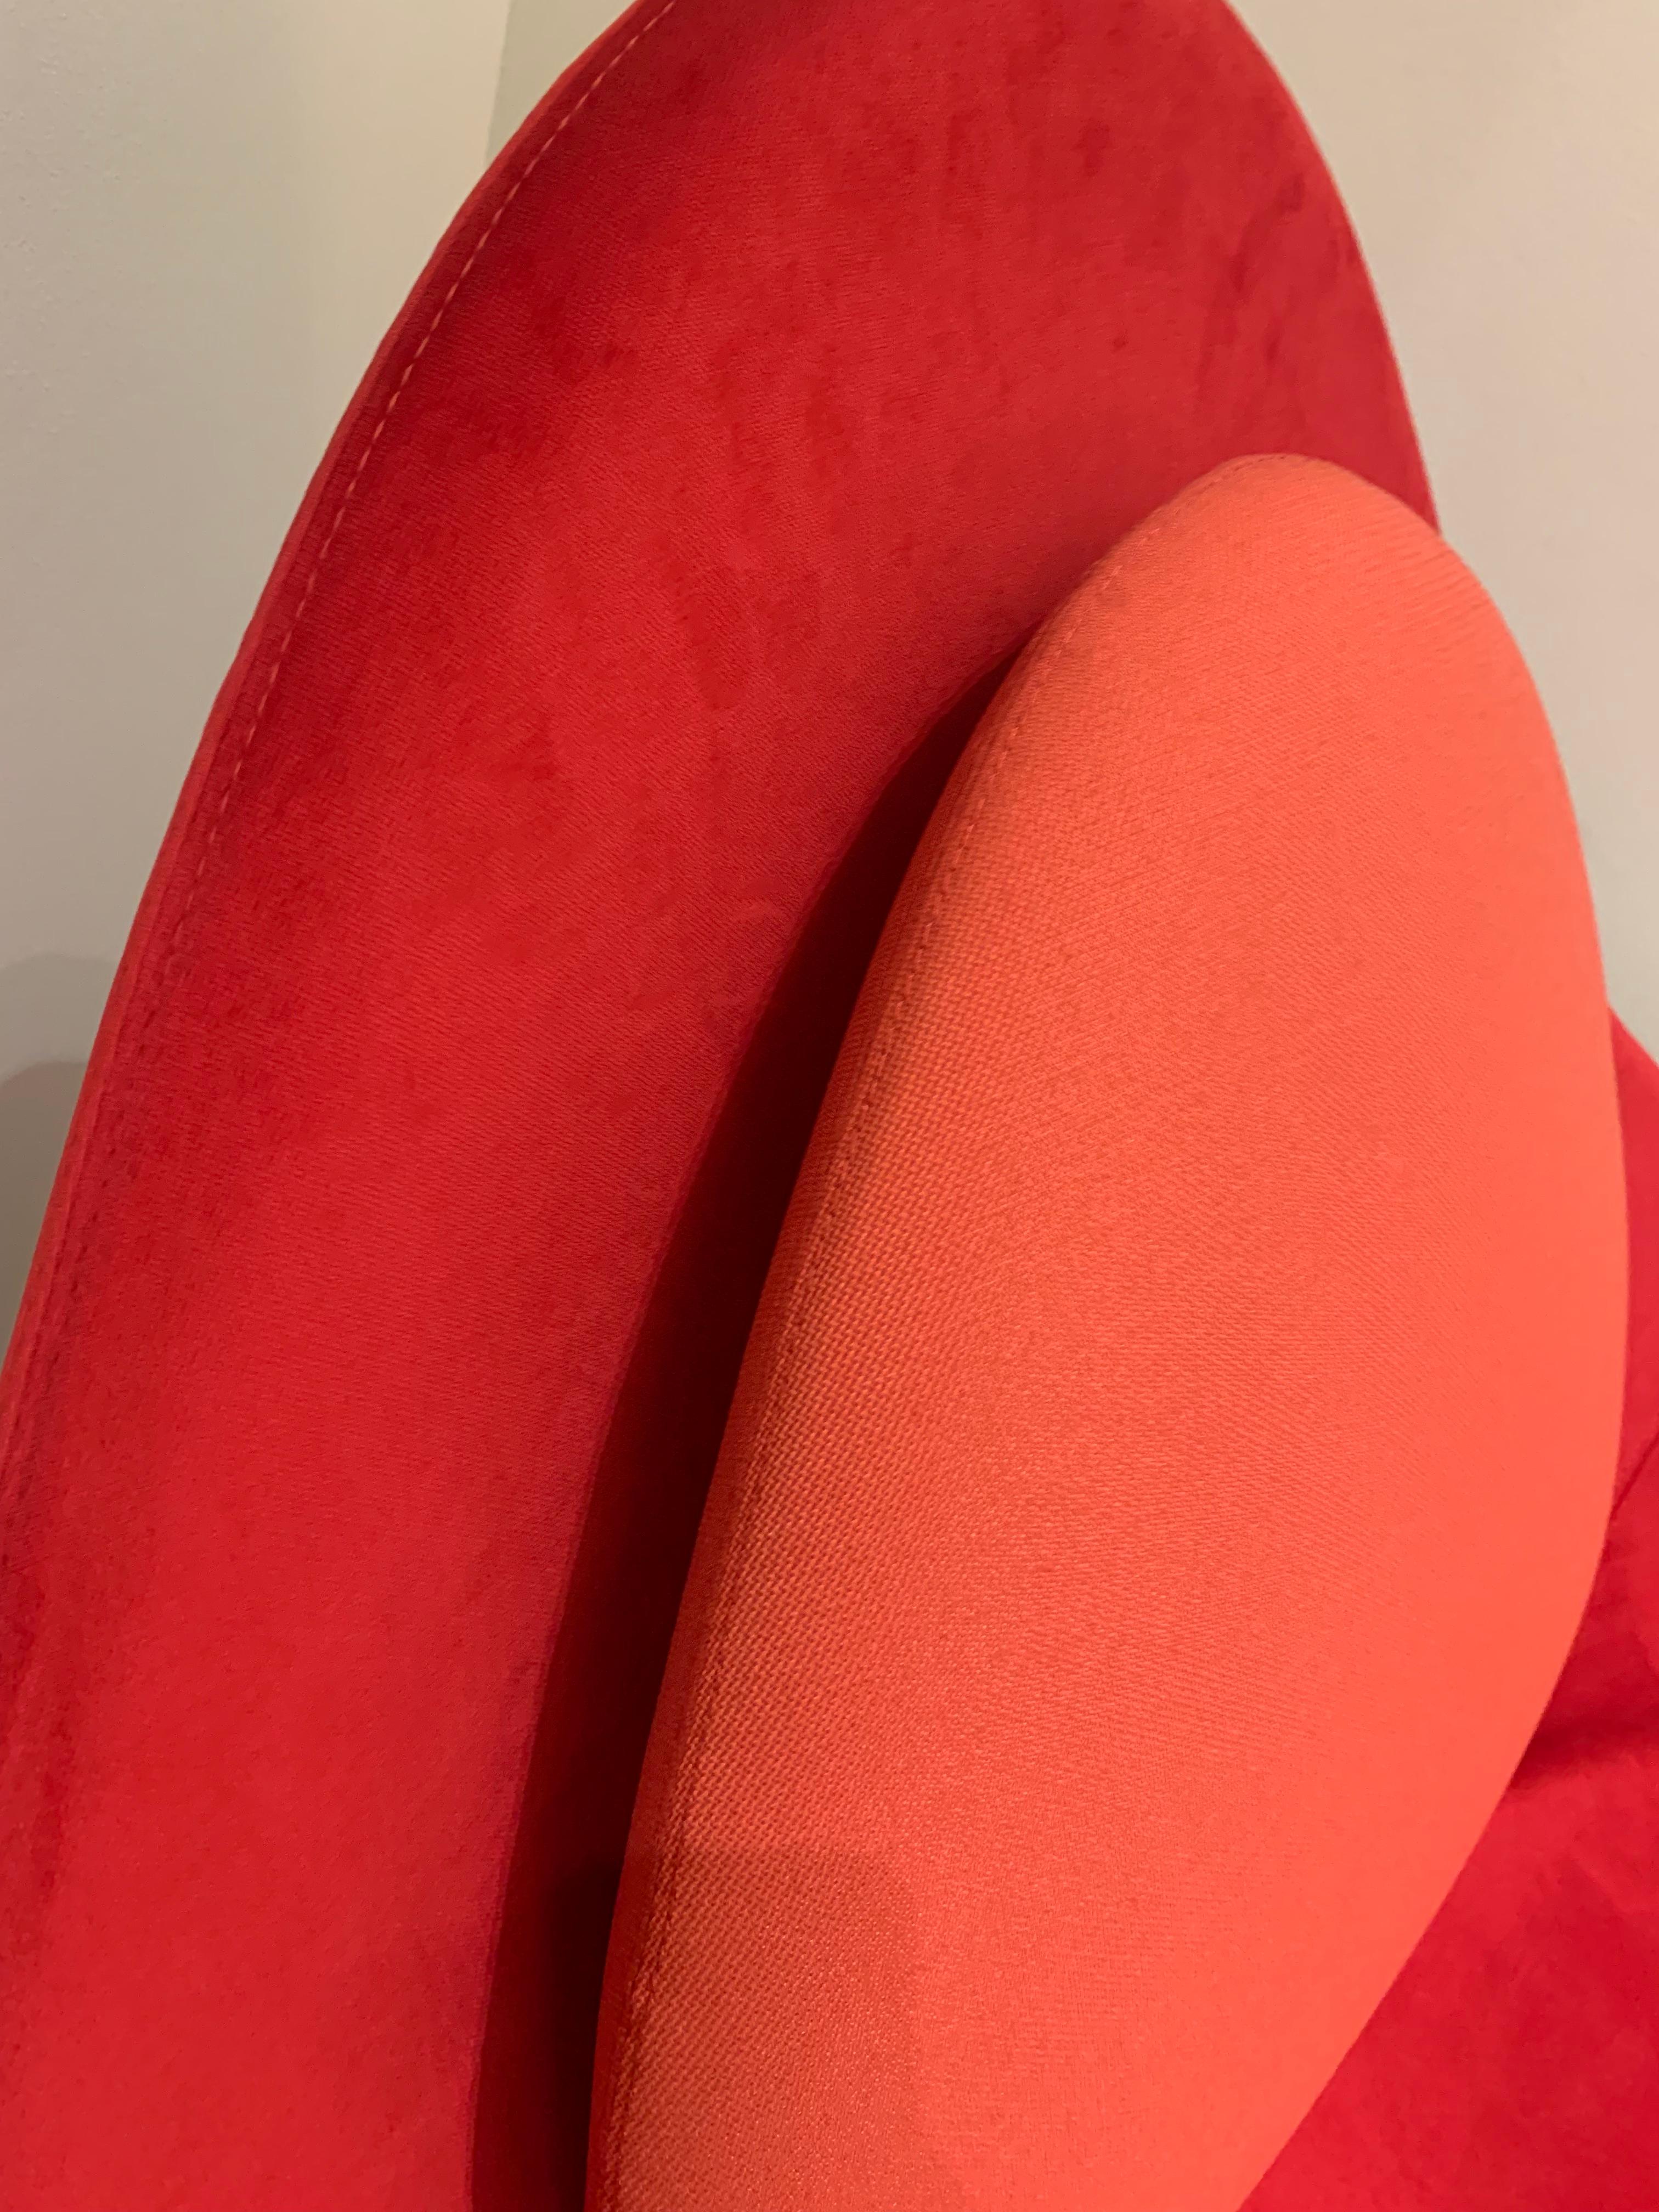 Fauteuil de salon Baleri Bermuda rouge conçu par Claesson Koivisto Rune, en stock en vente 2